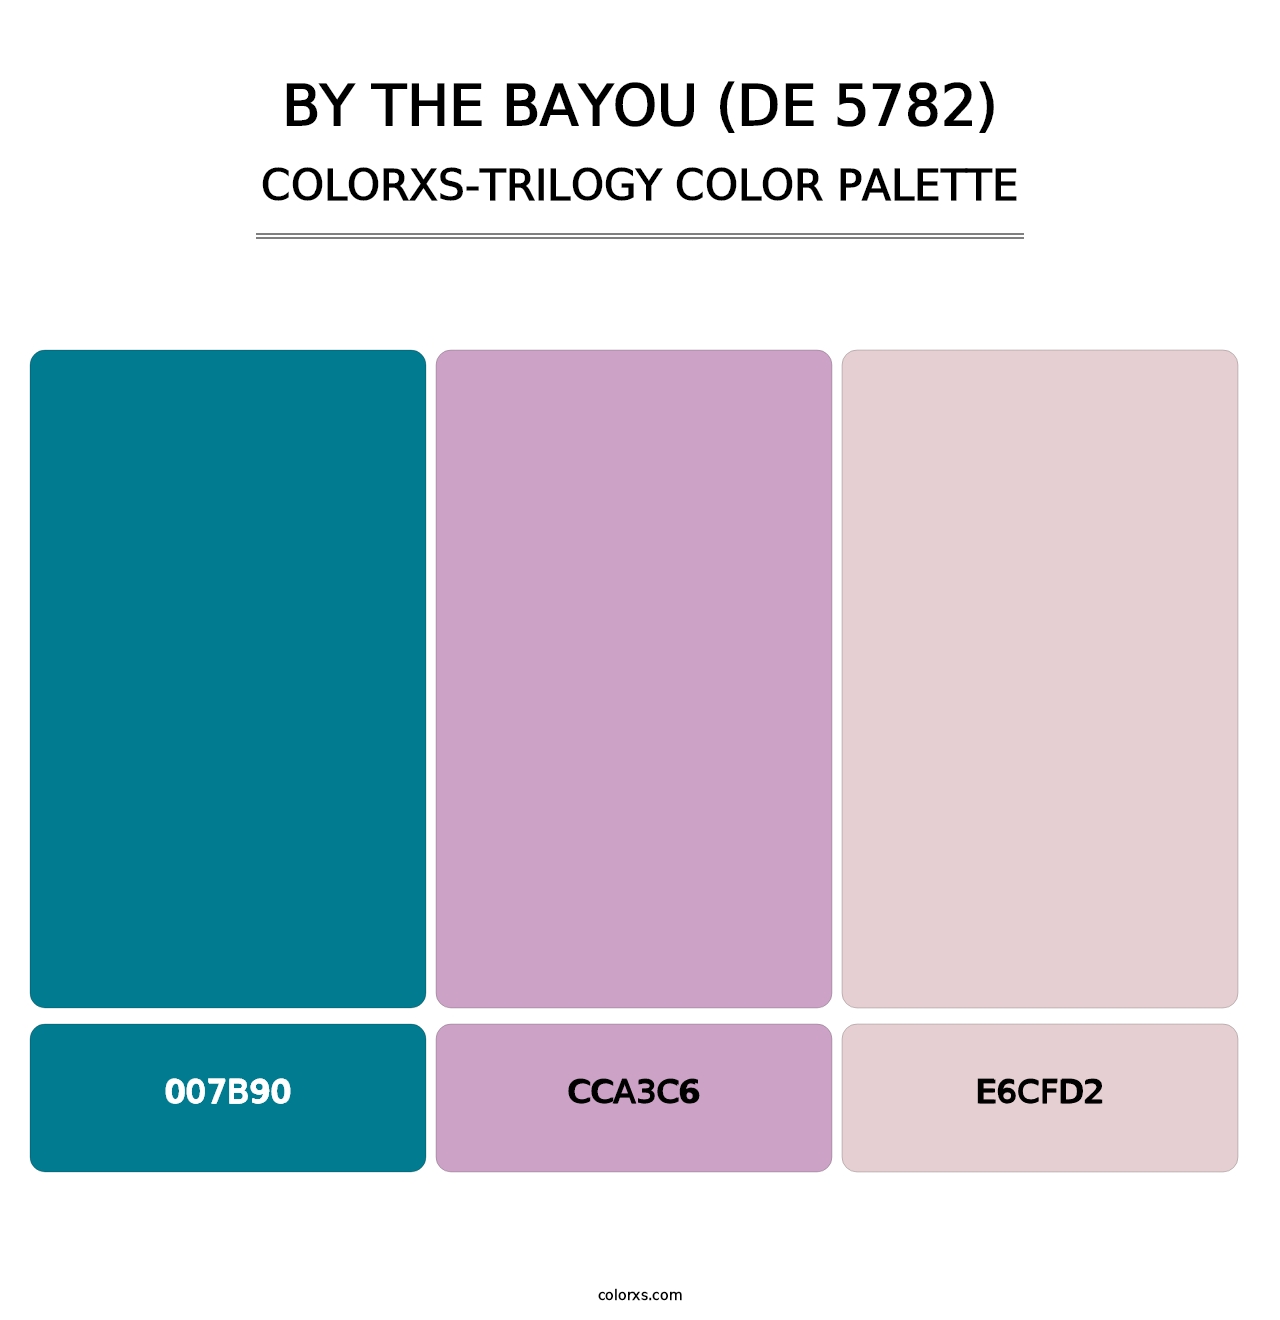 By the Bayou (DE 5782) - Colorxs Trilogy Palette